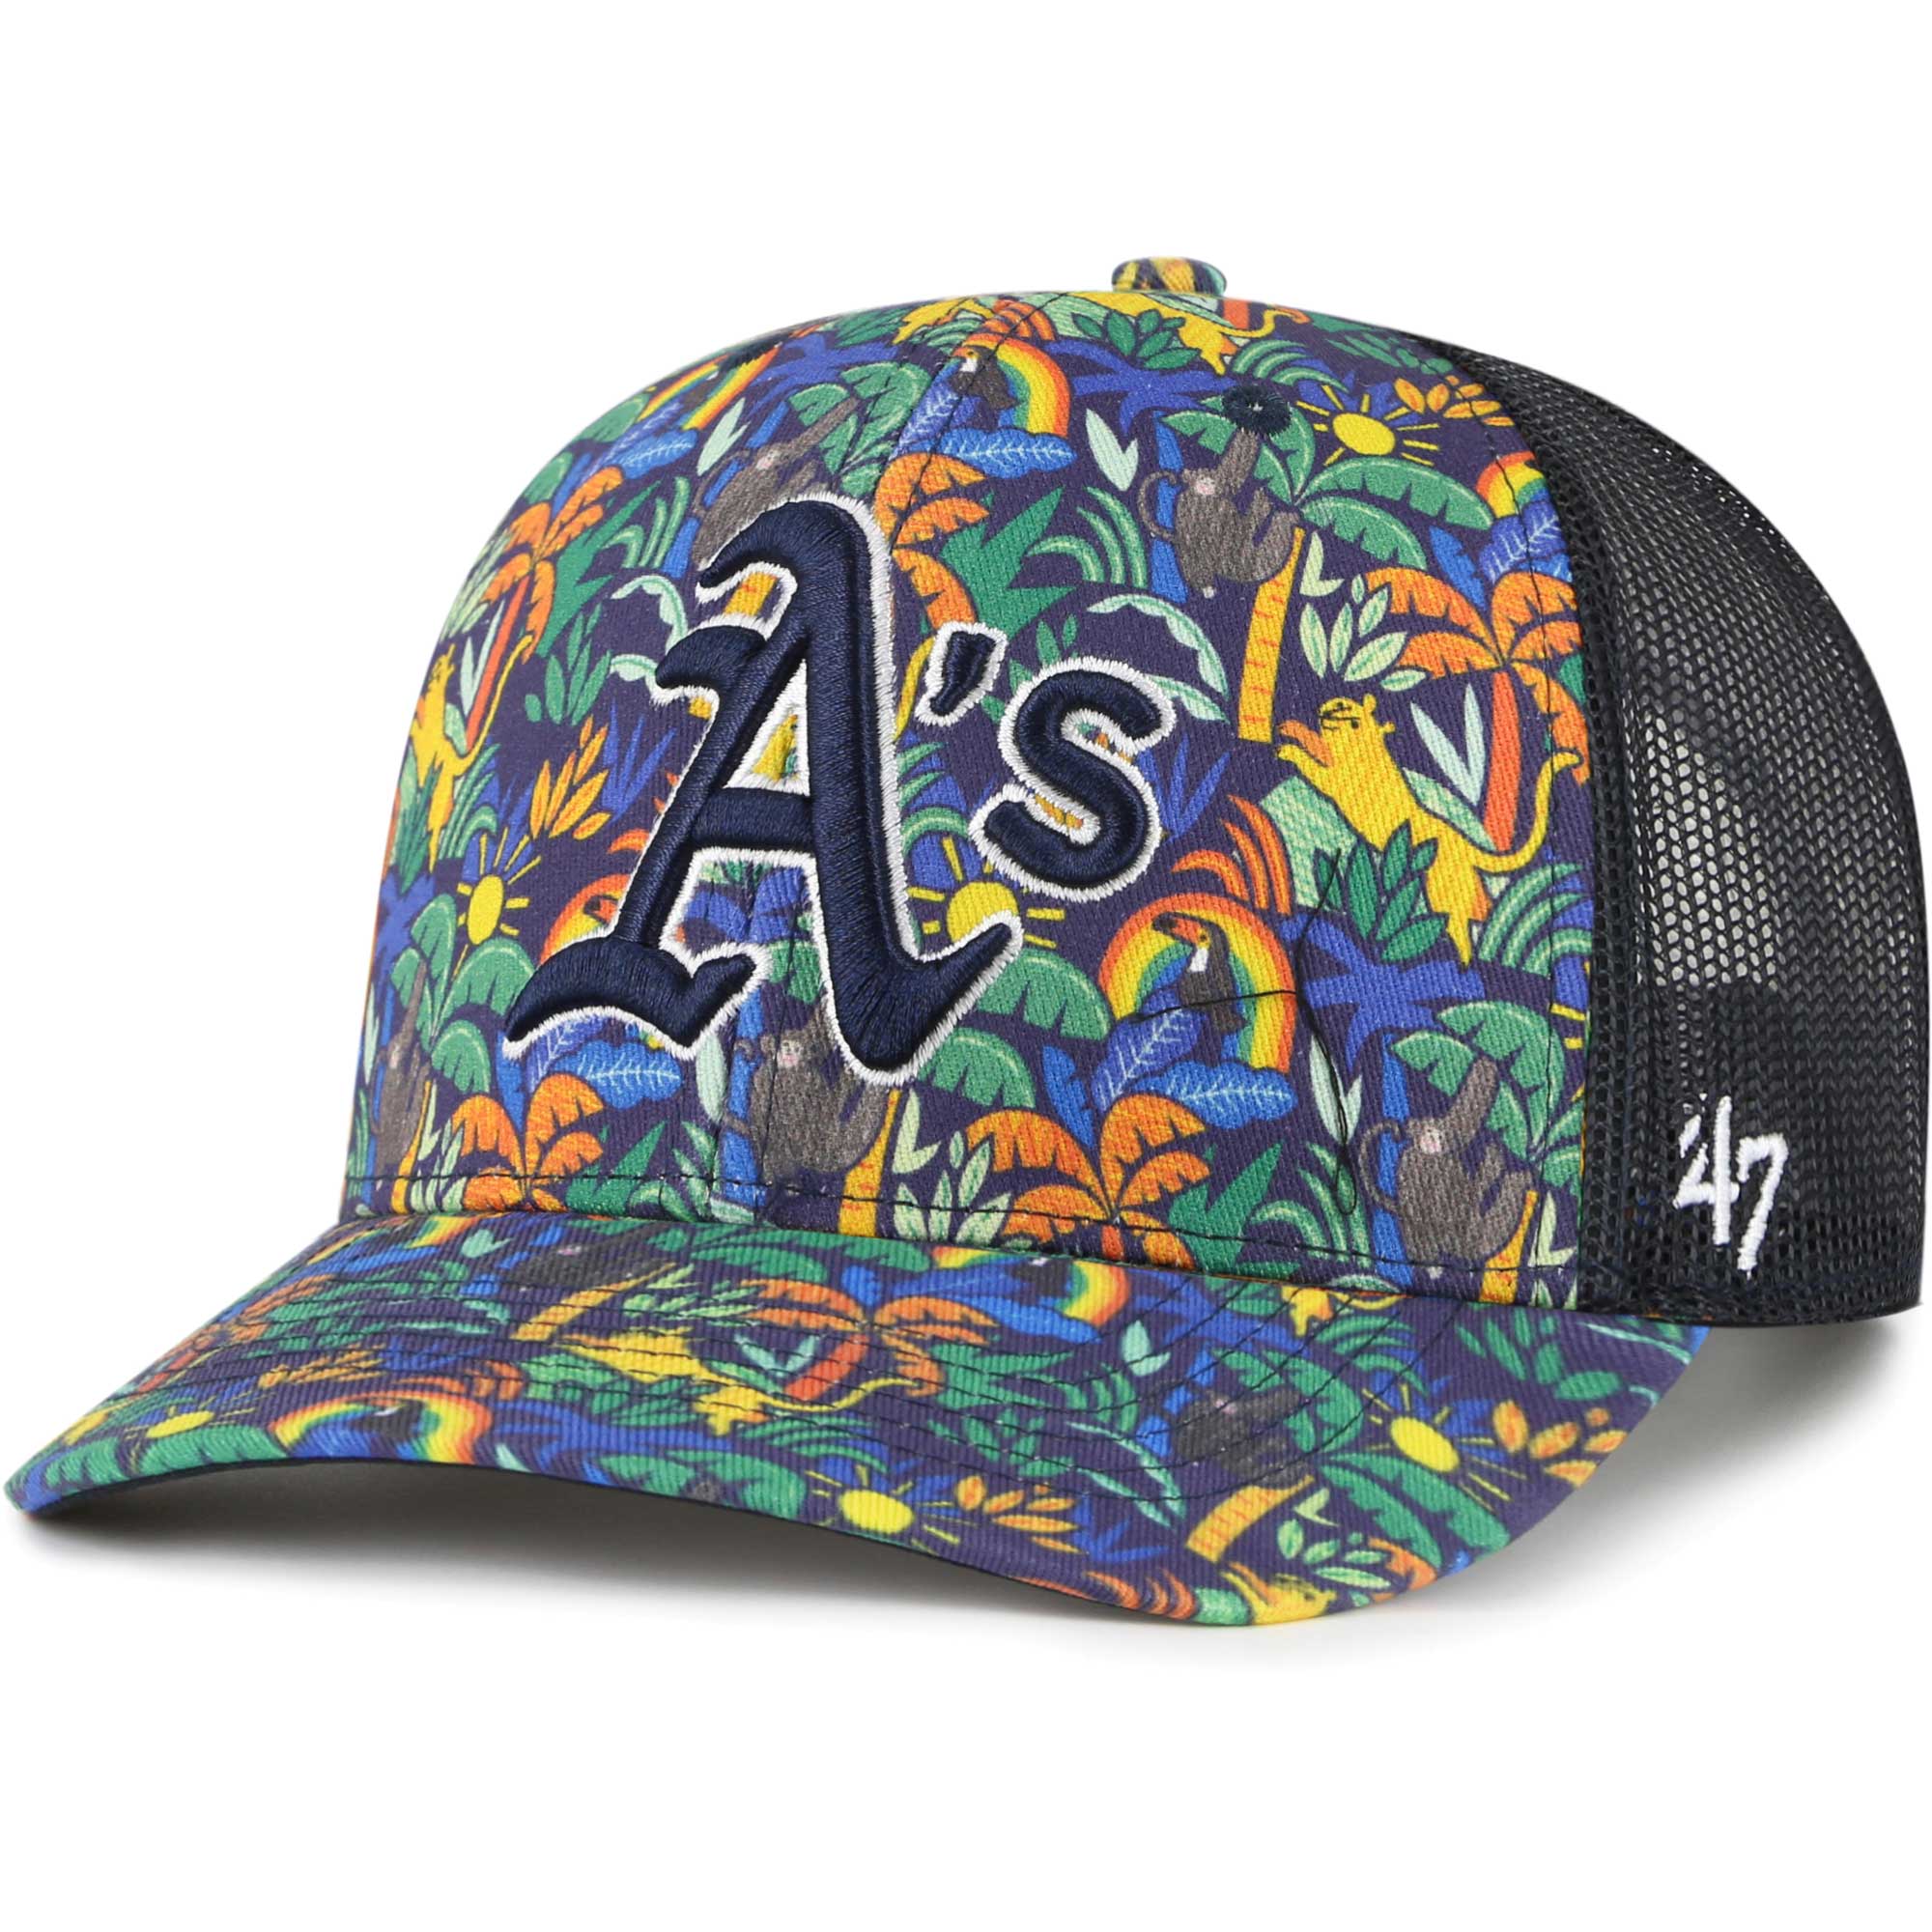 Academy Sports + Outdoors '47 University of Arkansas Cumberland Trucker Hat